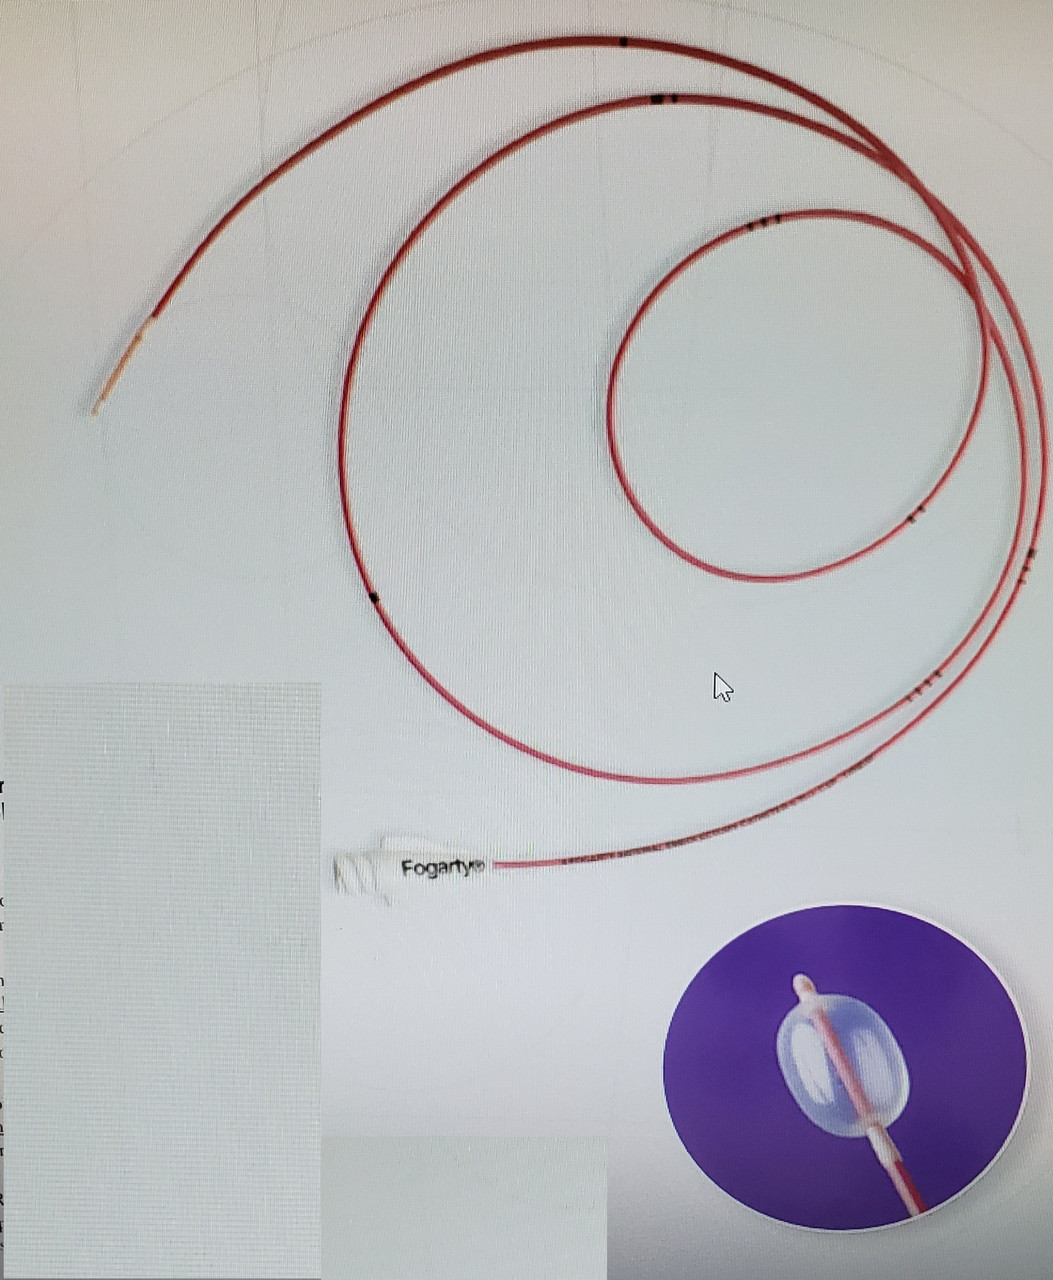 Edwards Lifesciences, 120403F, Fogarty Arterial Embolectomy Catheter (tube  pack), 40 cm 3Fr, price of each - MedicalEcart